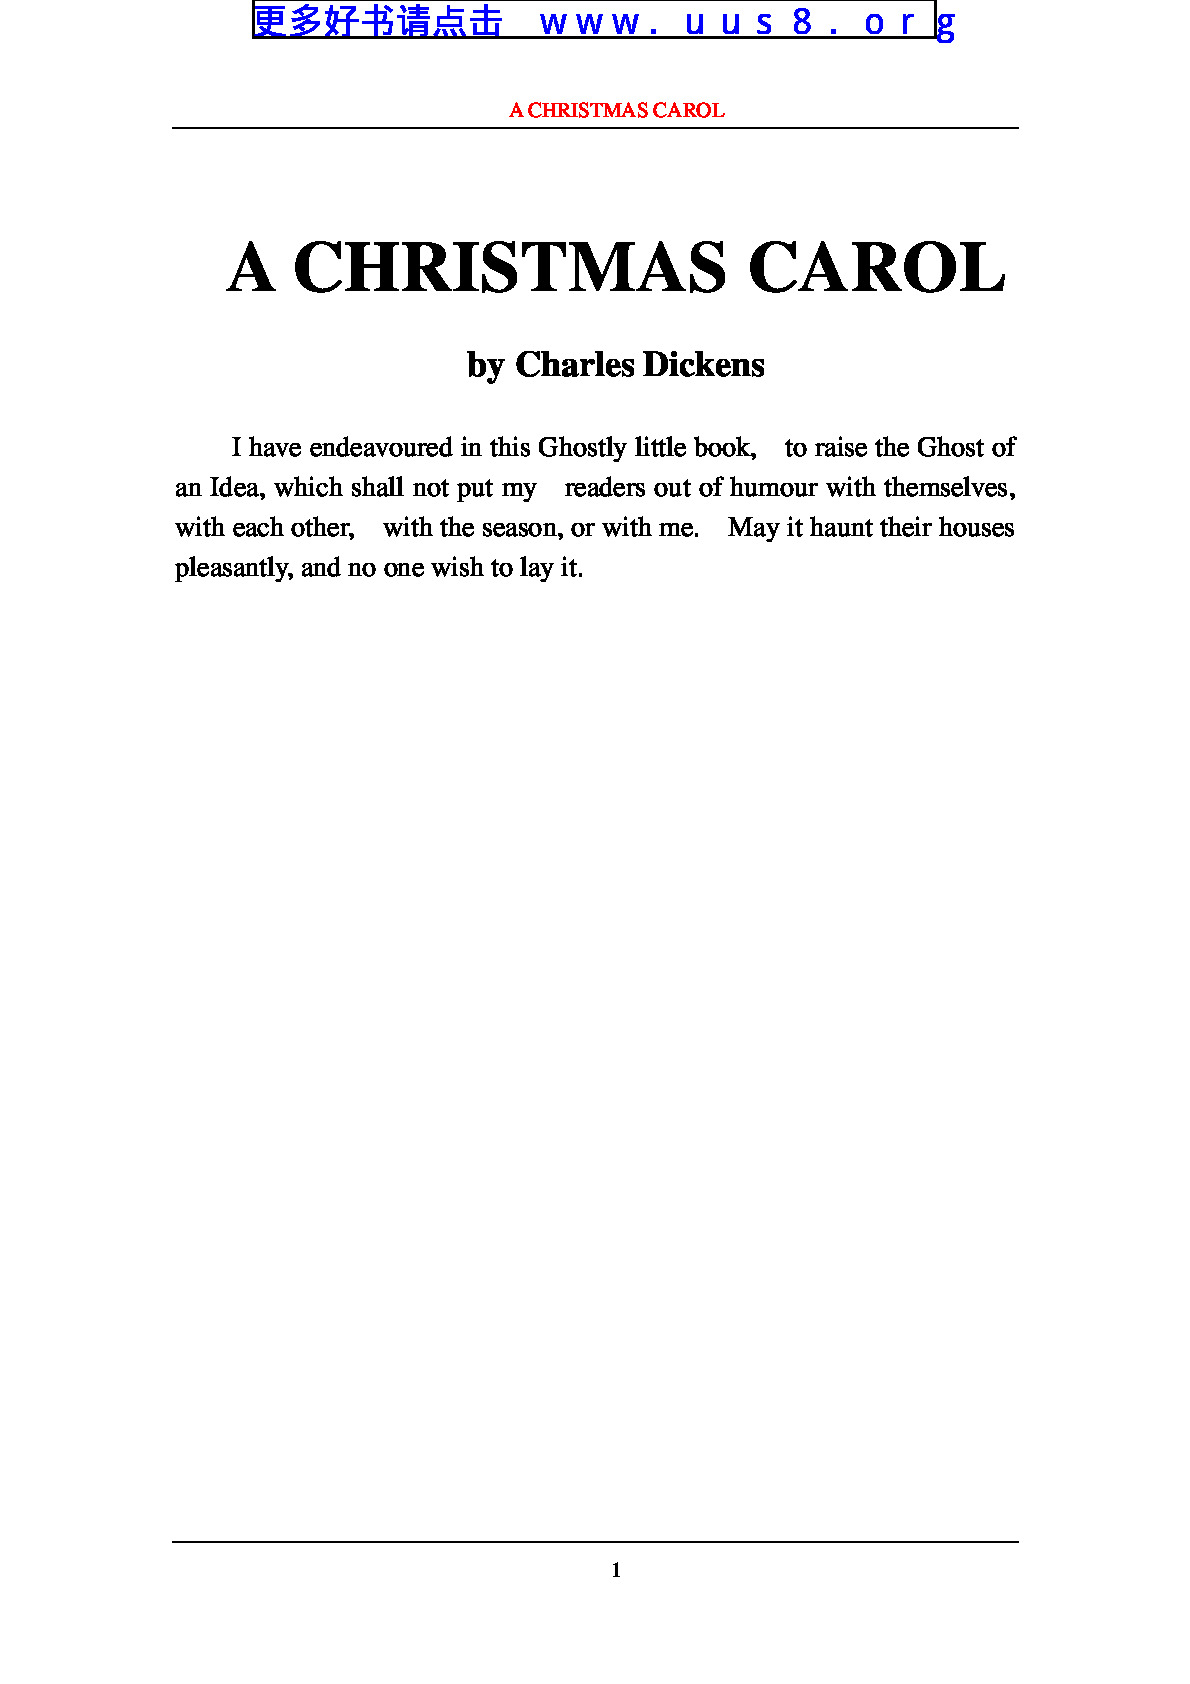 a_christmas_carol(圣诞赞歌)